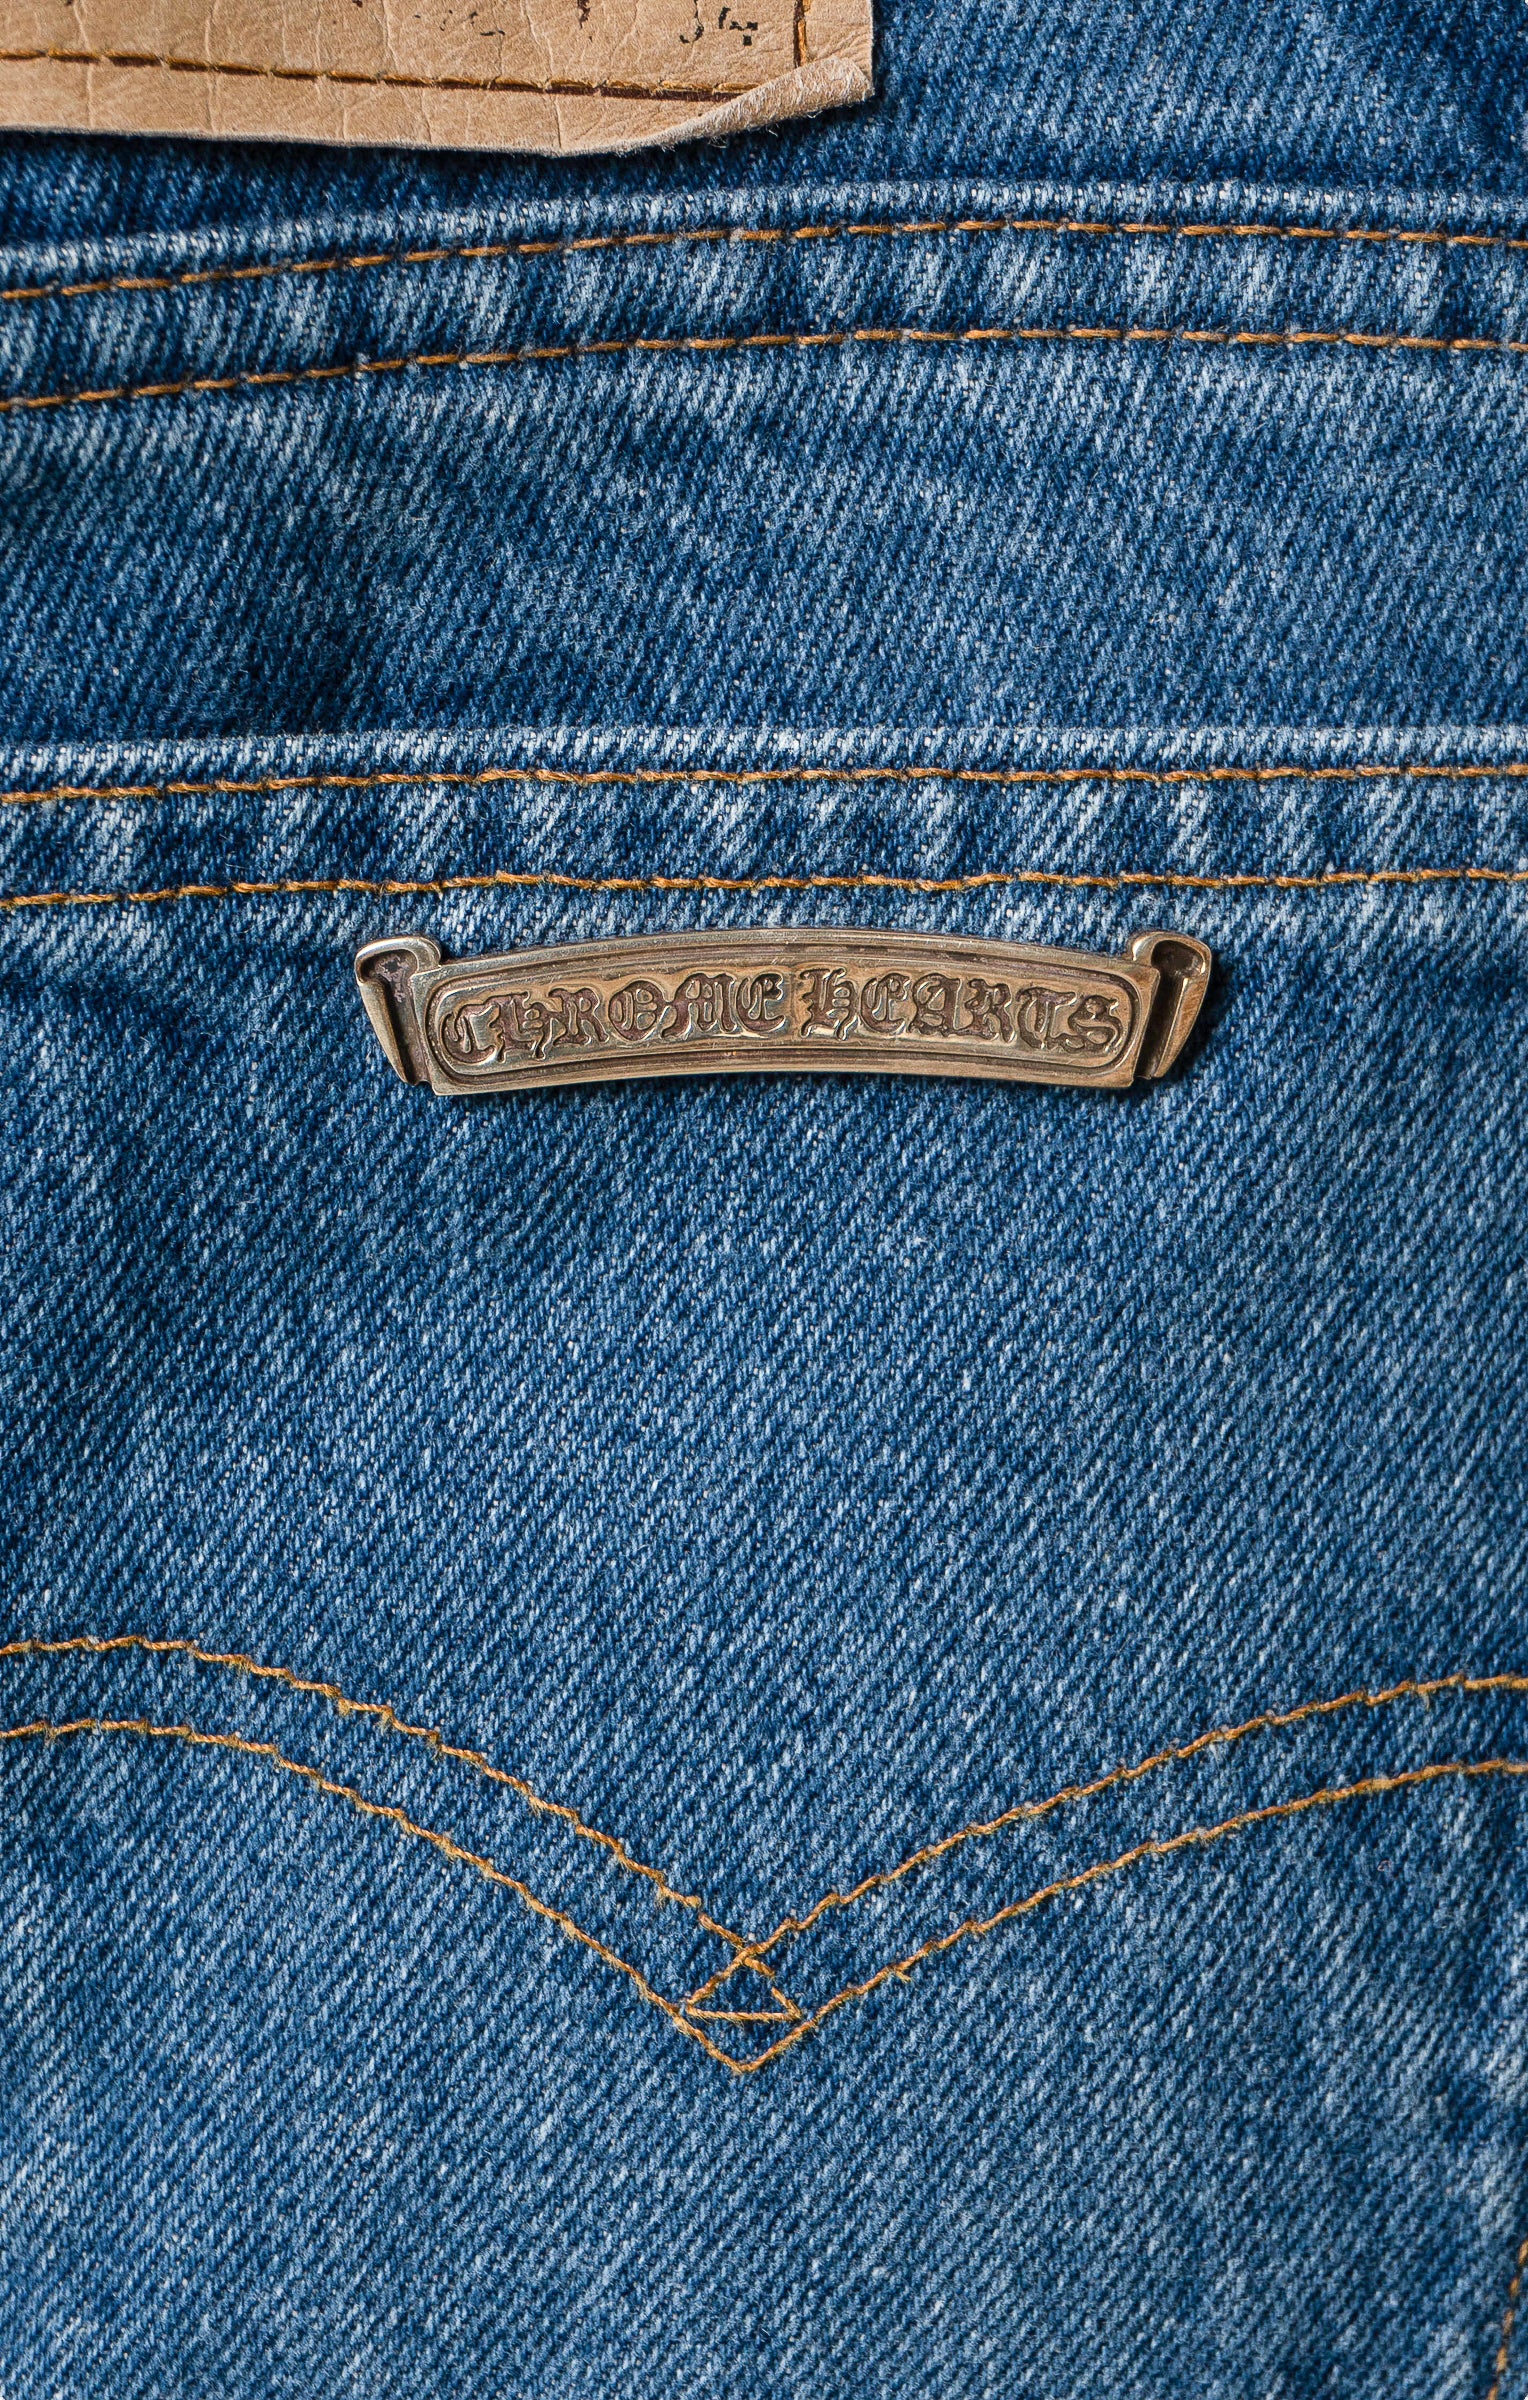 CHROME HEARTS x VINTAGE LEVI'S (RARE) Jeans Size: No size tags, fit like US 30/10